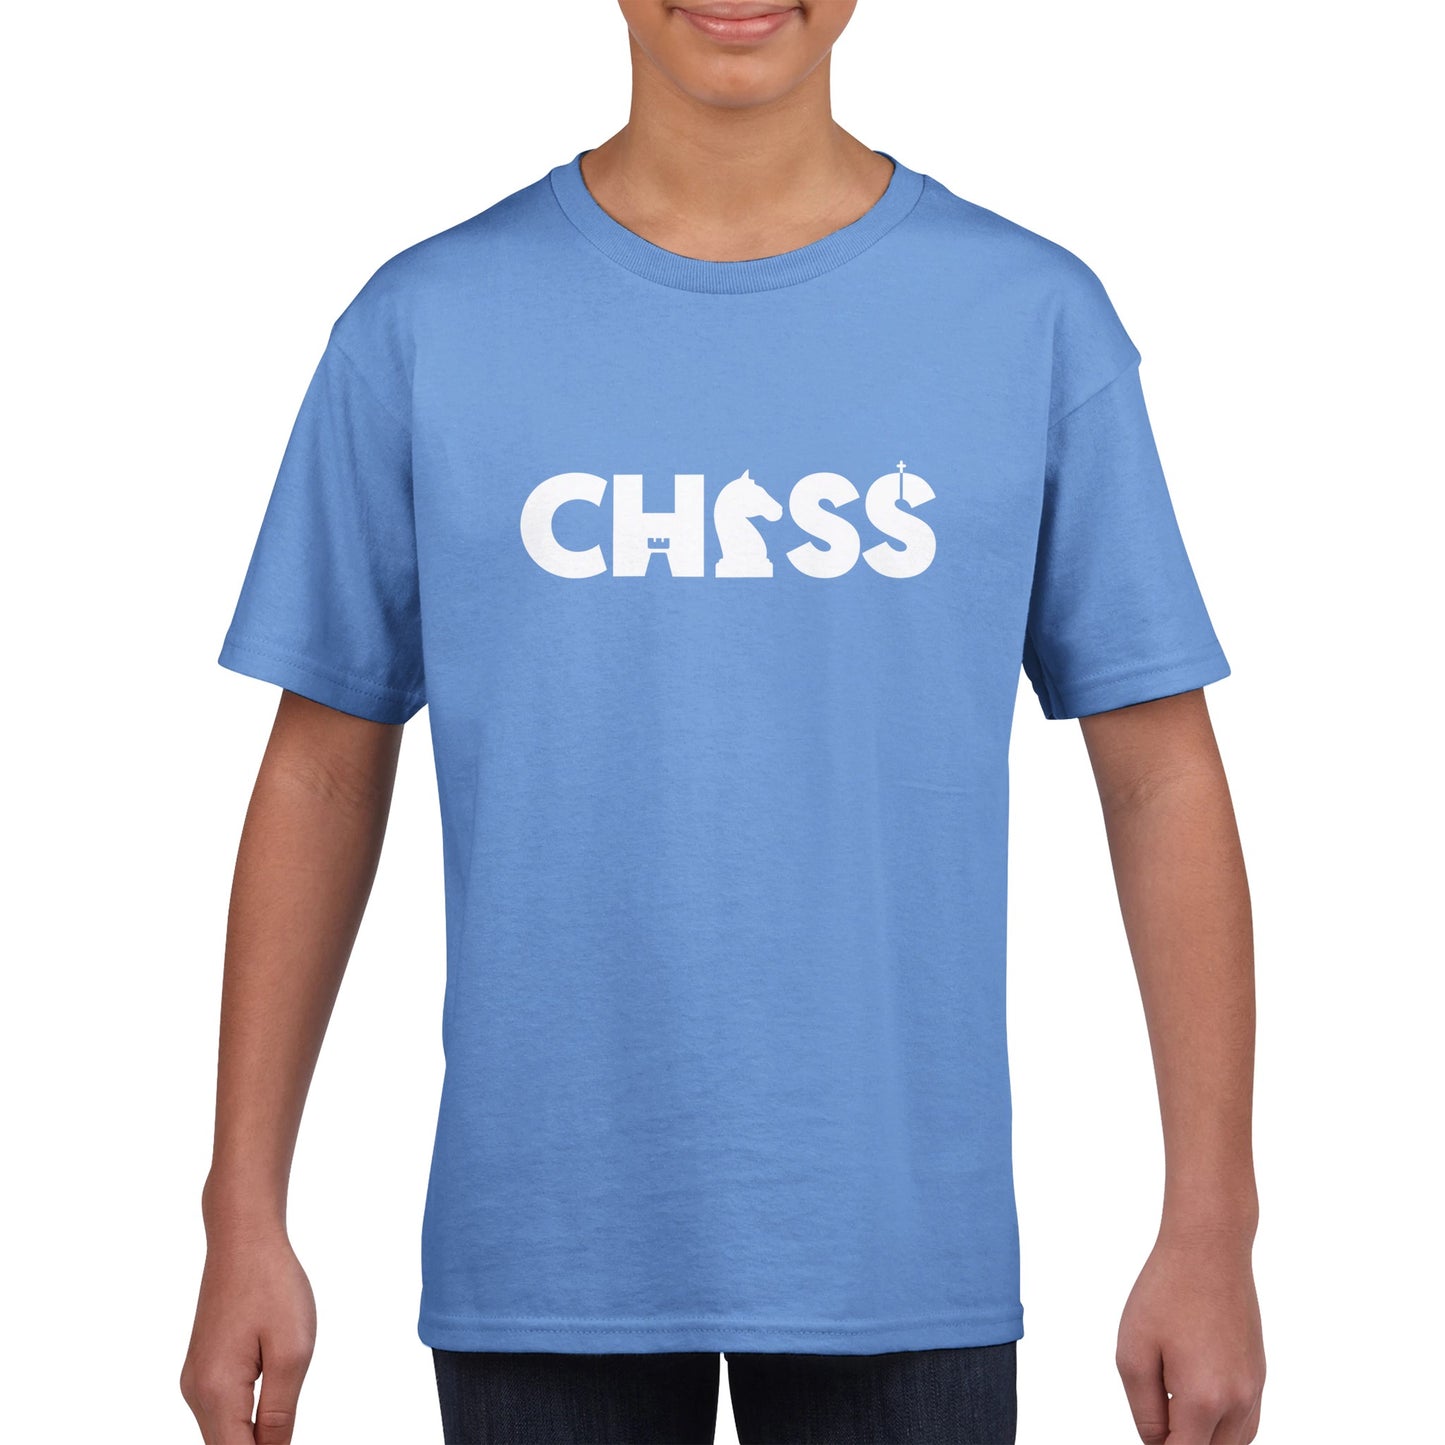 Children's clothing for chess lovers